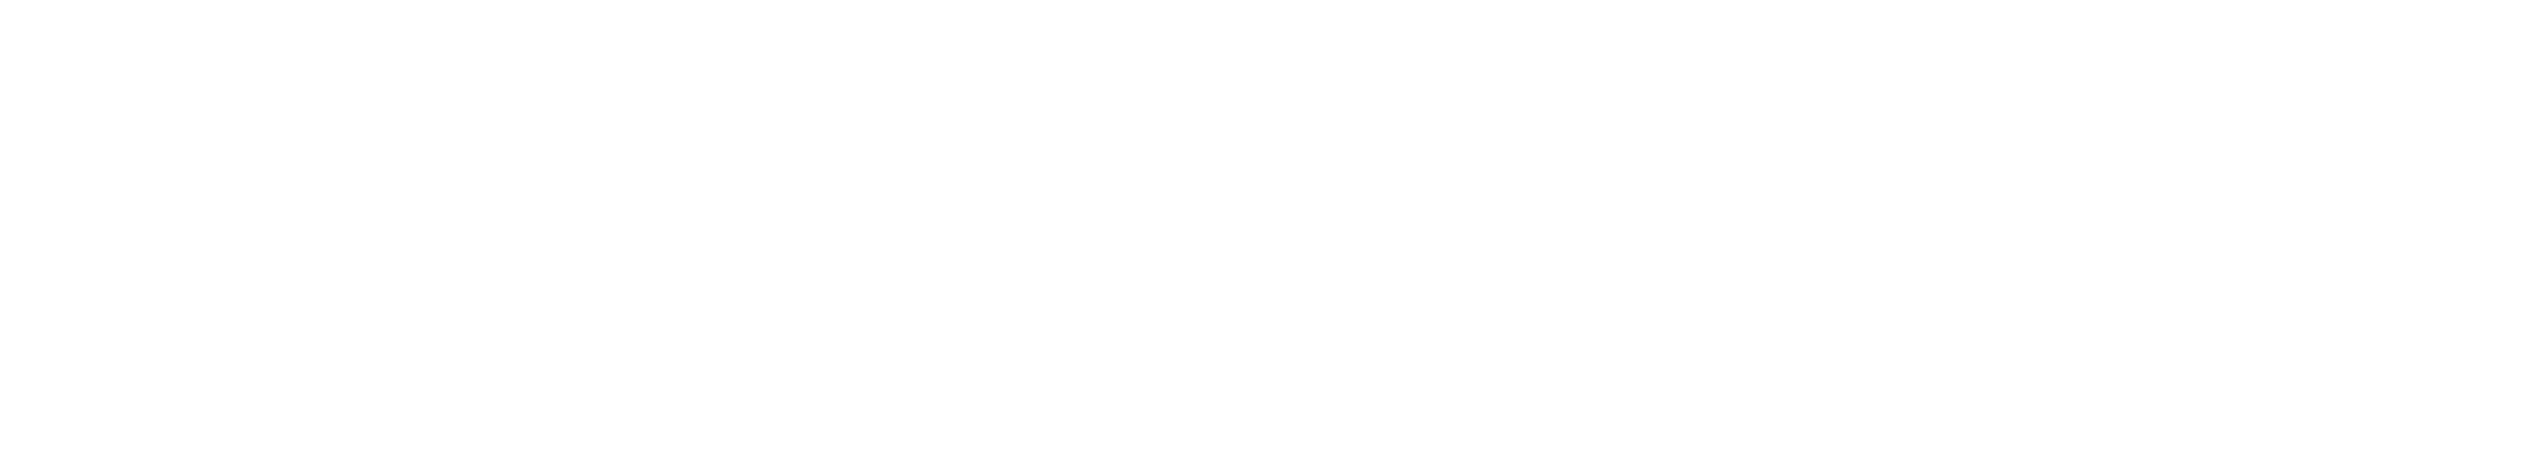 white-cerego-logo